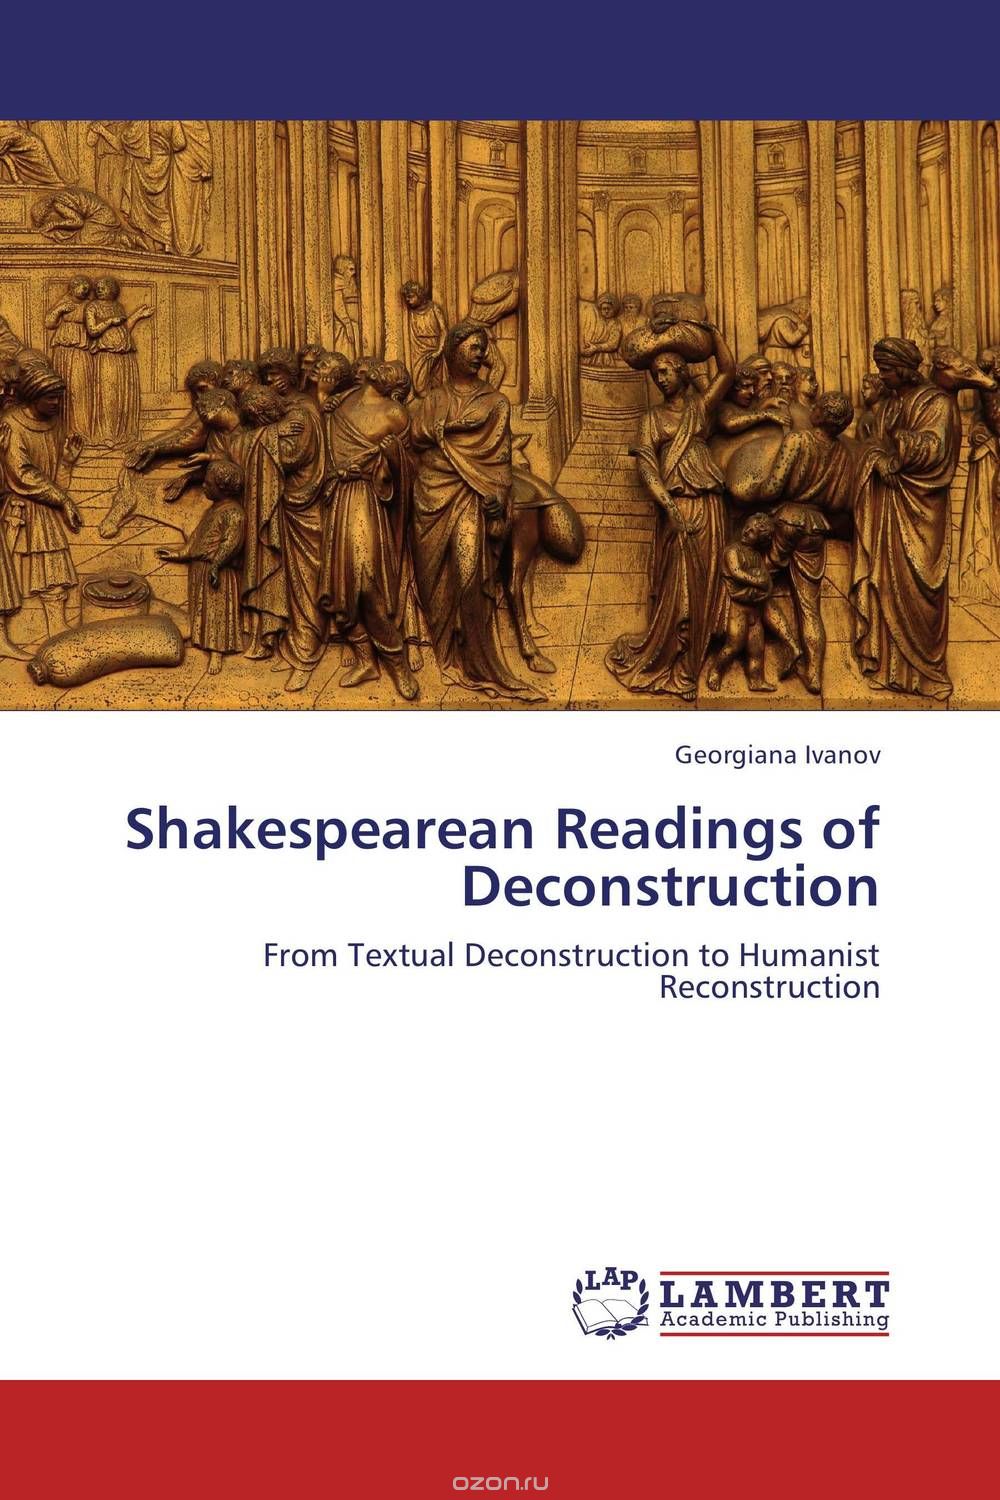 Скачать книгу "Shakespearean Readings of Deconstruction"